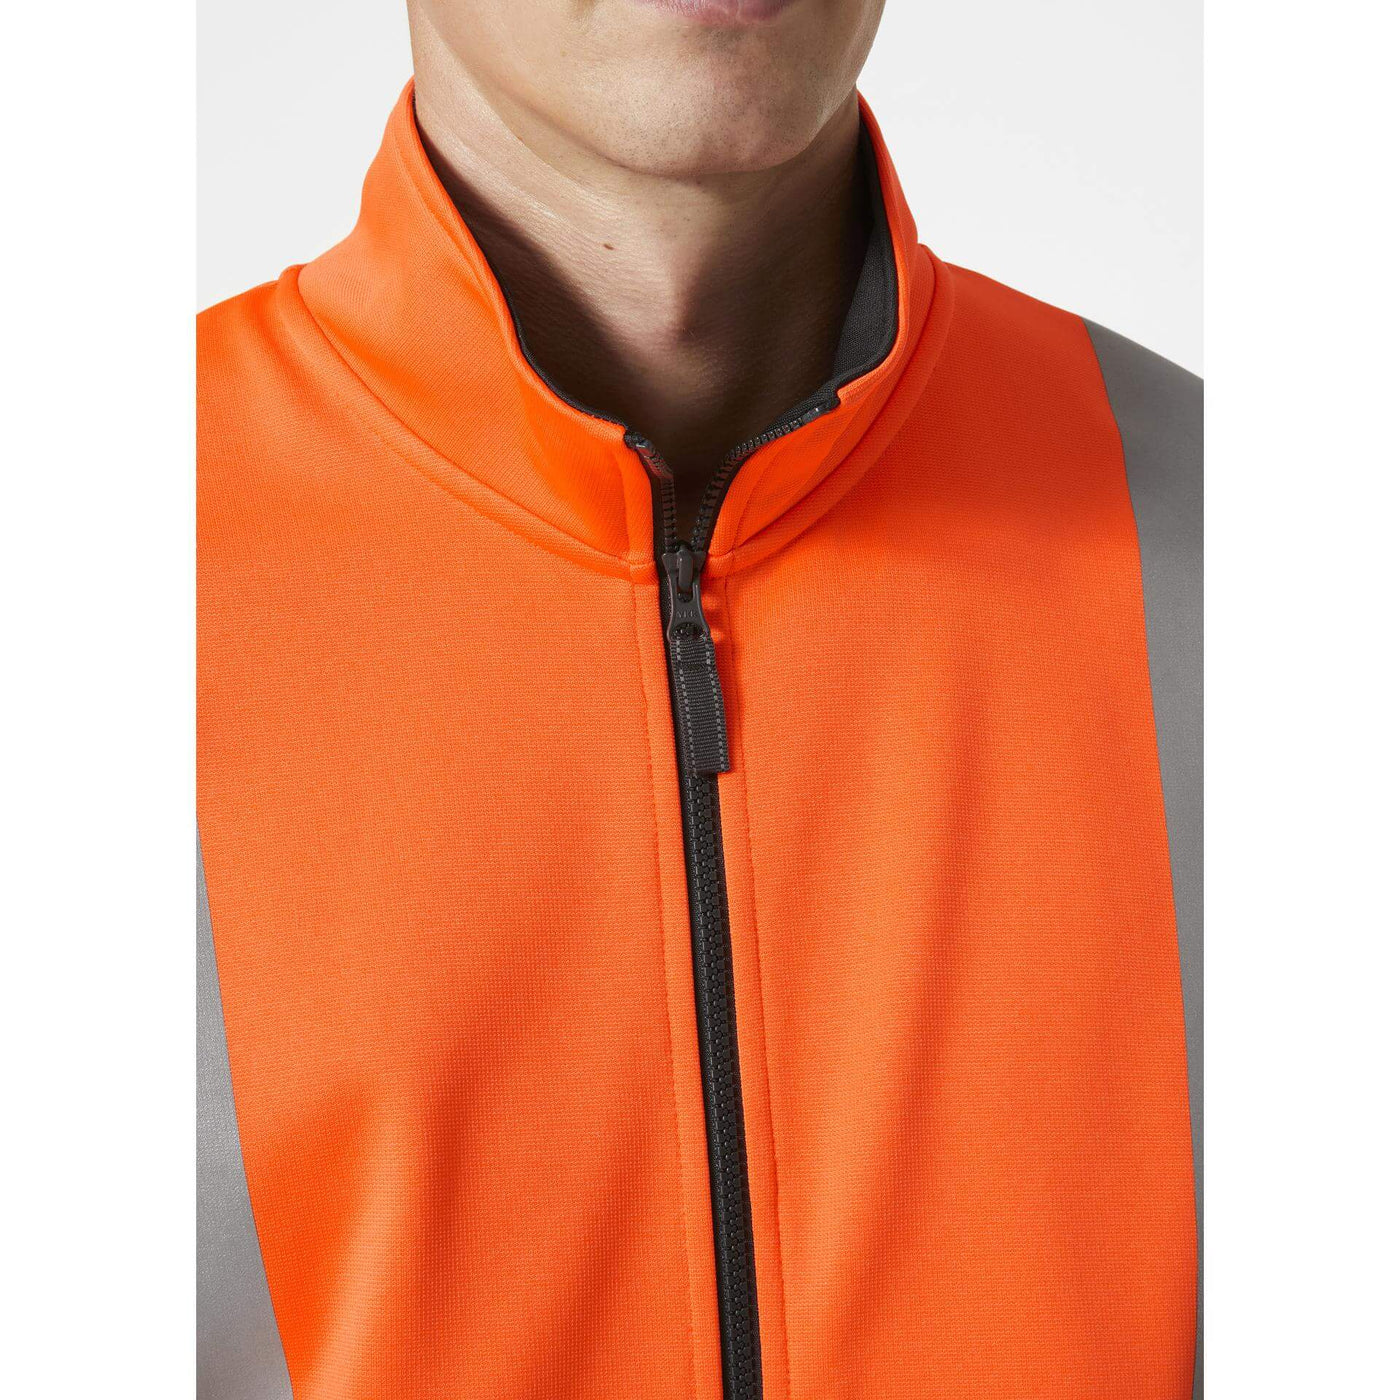 Helly Hansen Addvis Hi-Vis Zip Sweatshirt Class 1 Orange/Ebony Feature 2#colour_orange-ebony